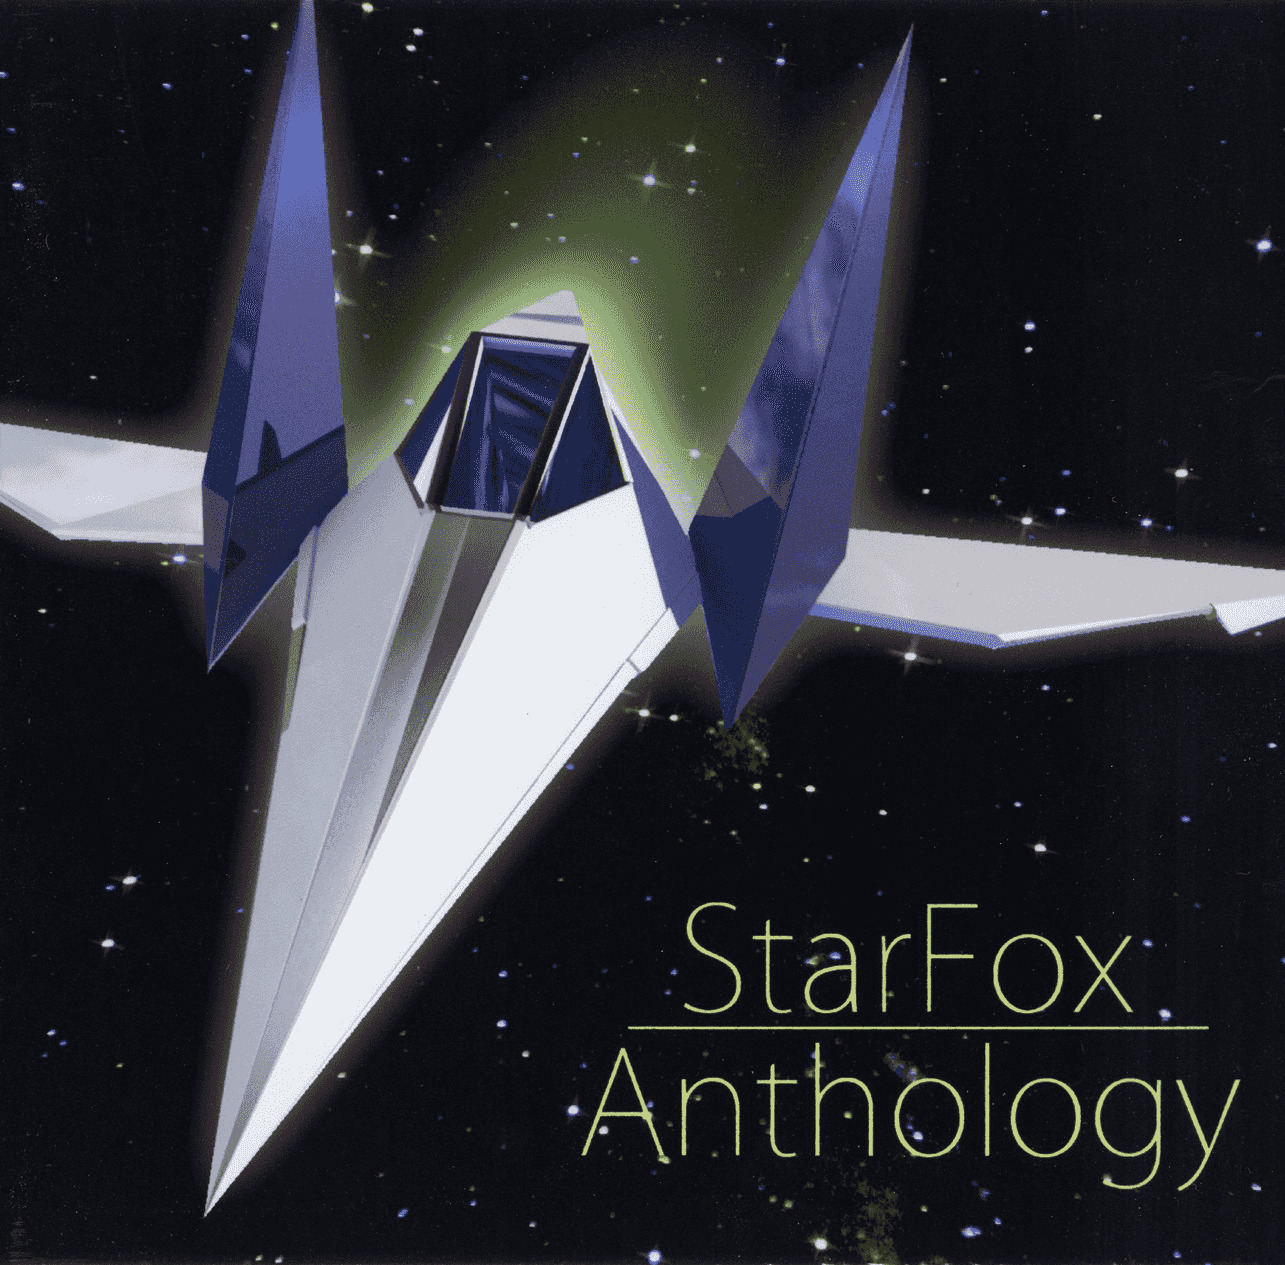 StarFox Anthology